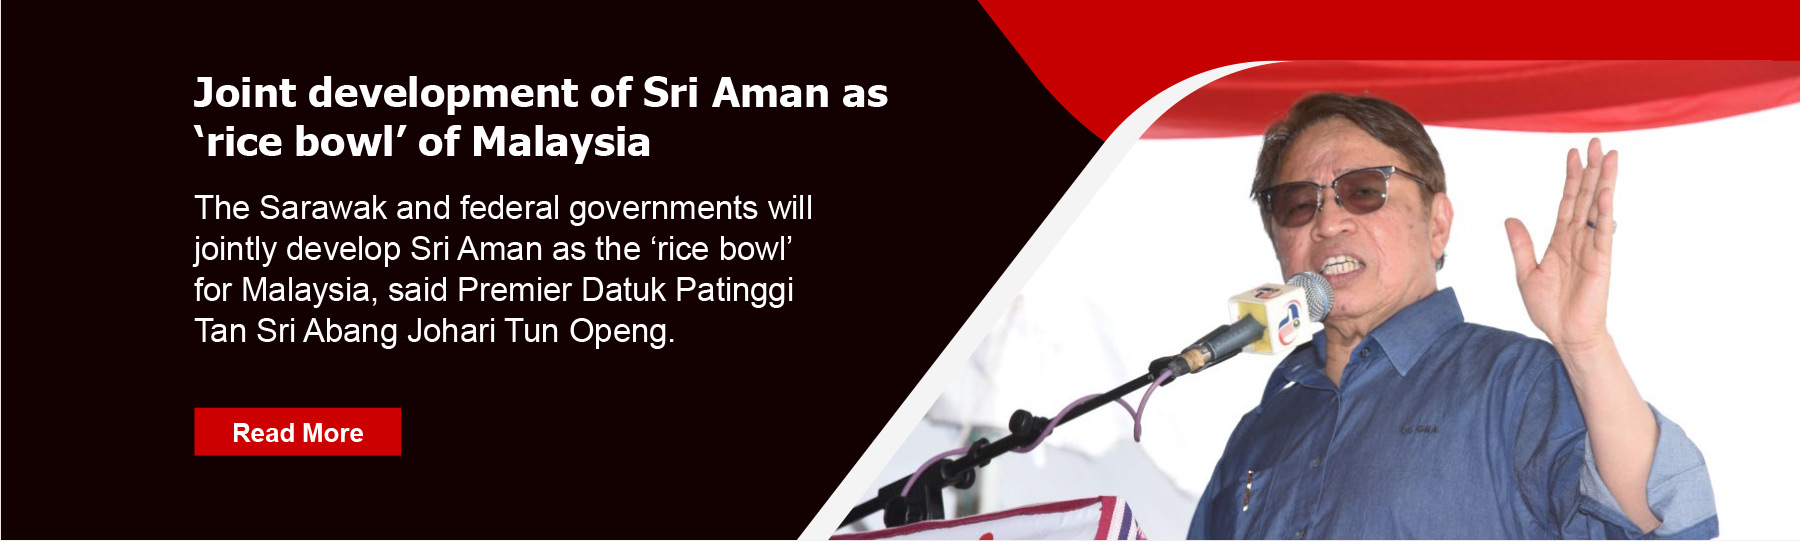 Joint development of Sri Aman as ‘rice bowl’ of Malaysia